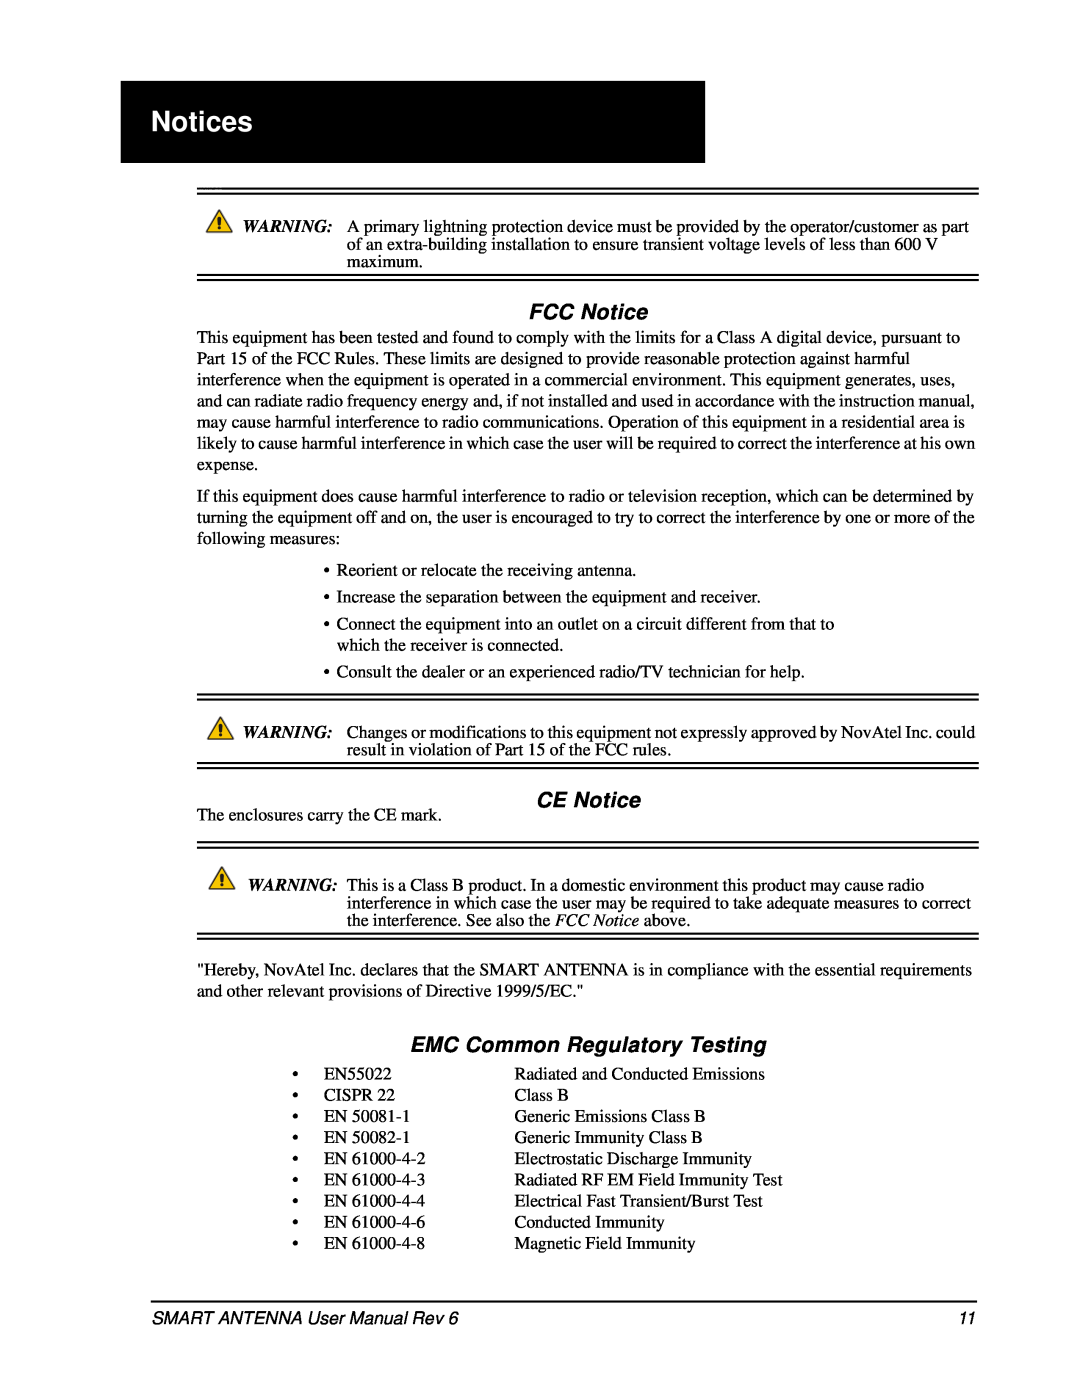 Novatel SMART ANTENNA user manual Notices, FCC Notice, CE Notice, EMC Common Regulatory Testing 